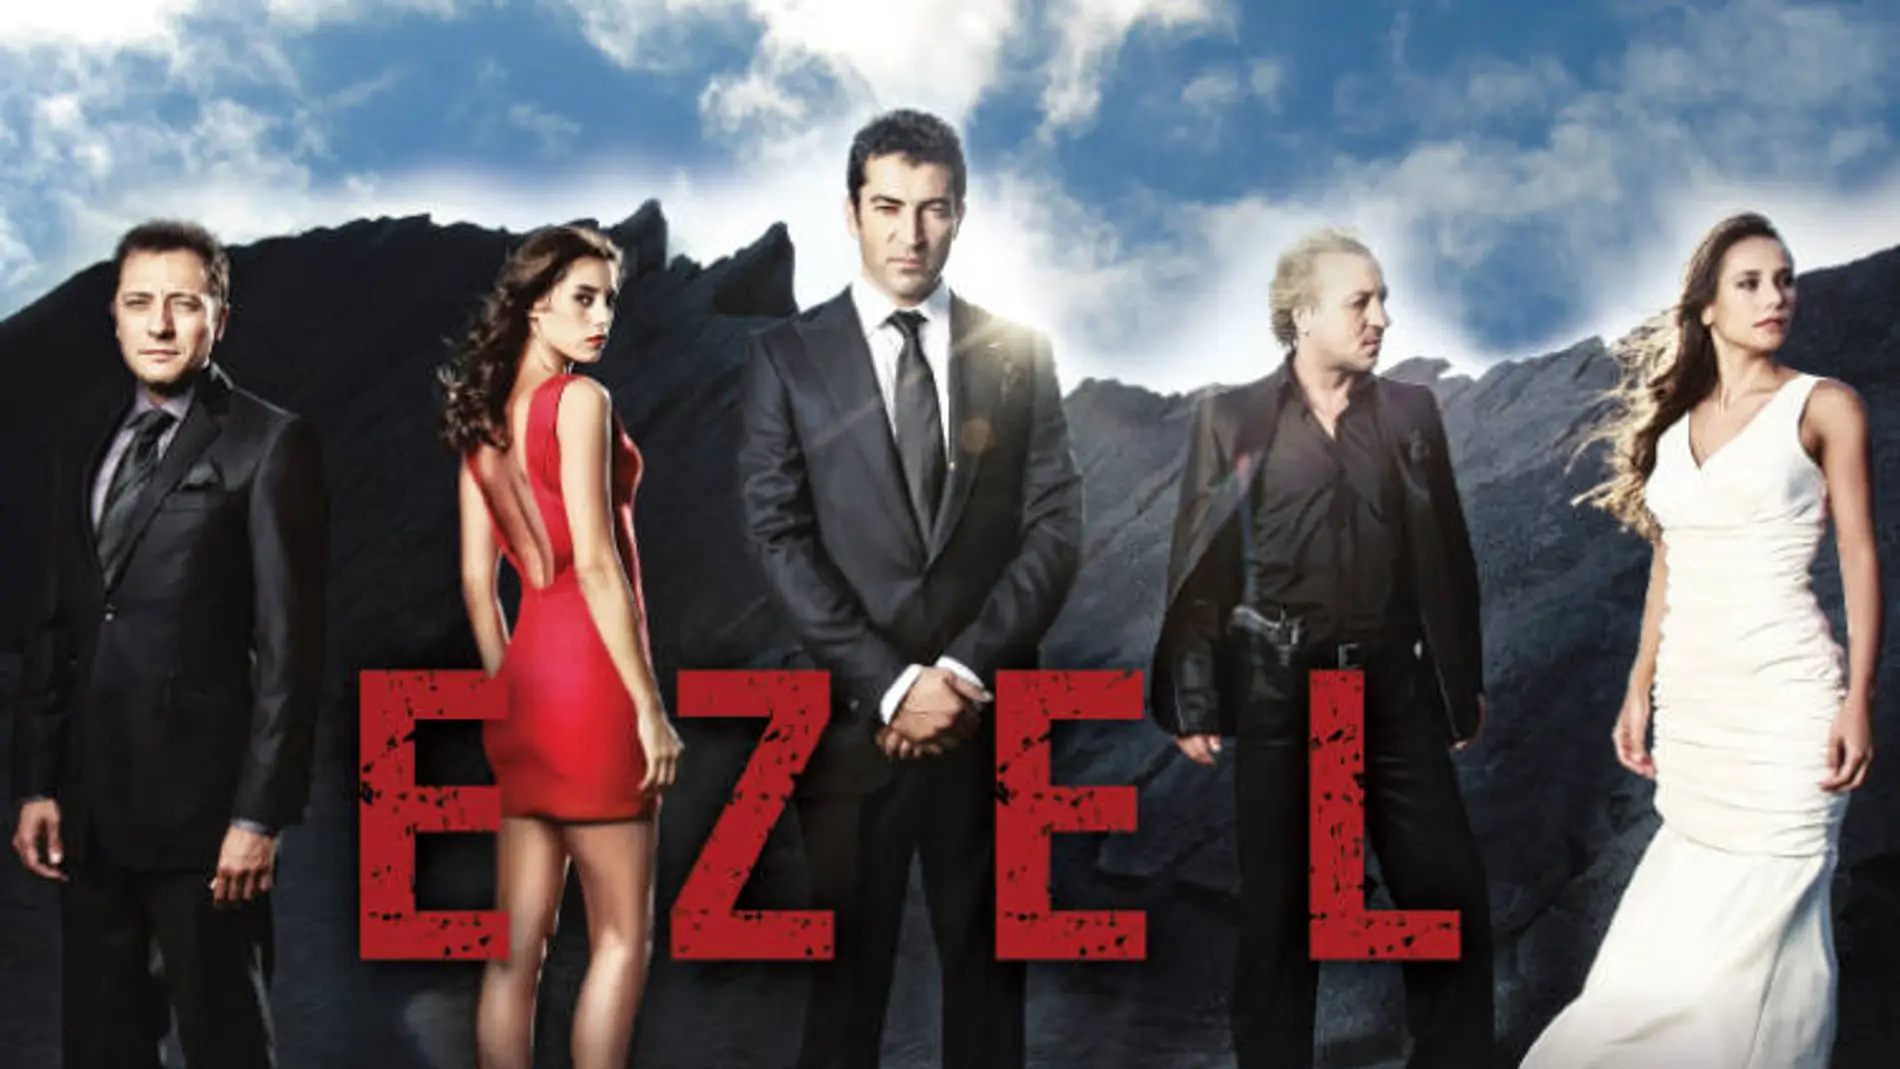 Nova estrena ‘Ezel’, de los productores de ‘Fatmagül’ e inspirada en ‘El conde de Montecristo’